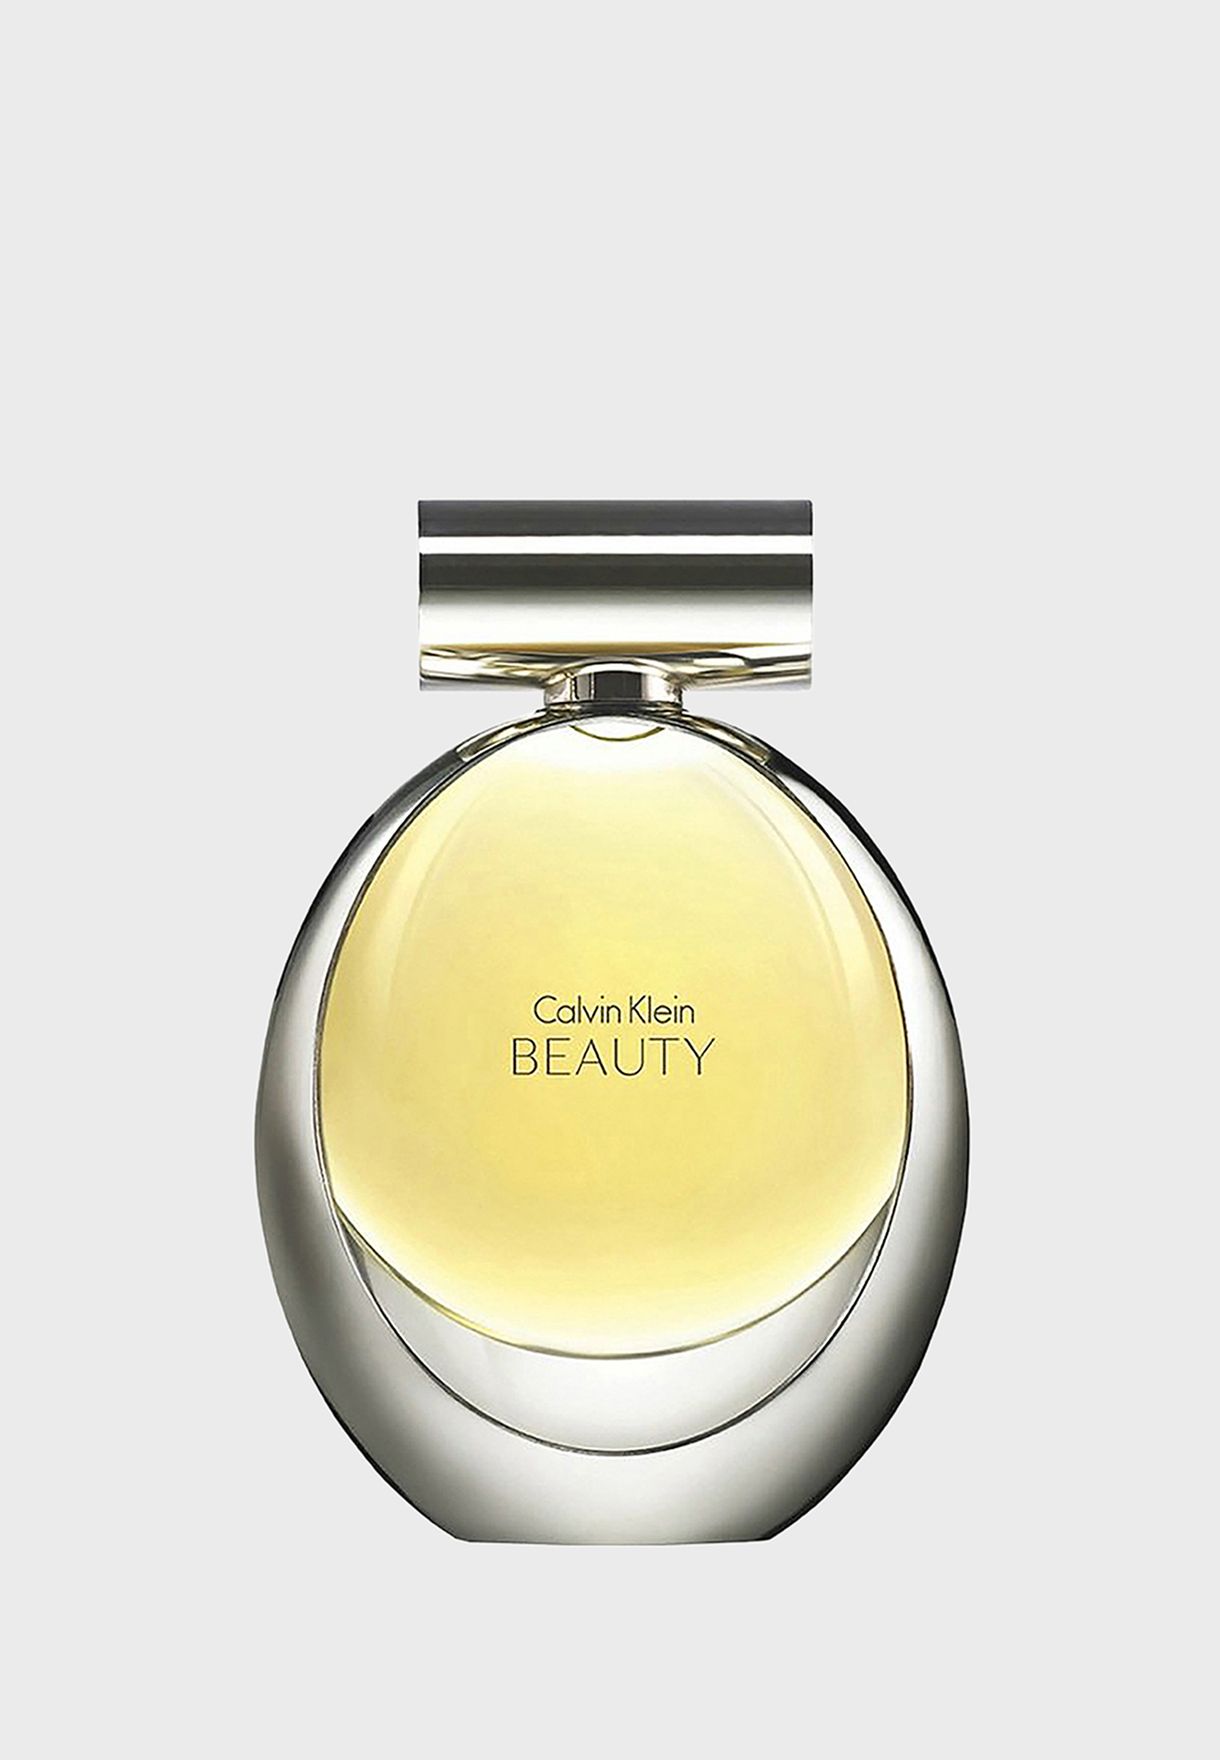 Sheer Beauty By Calvin Klein Buy Online Perfume Com